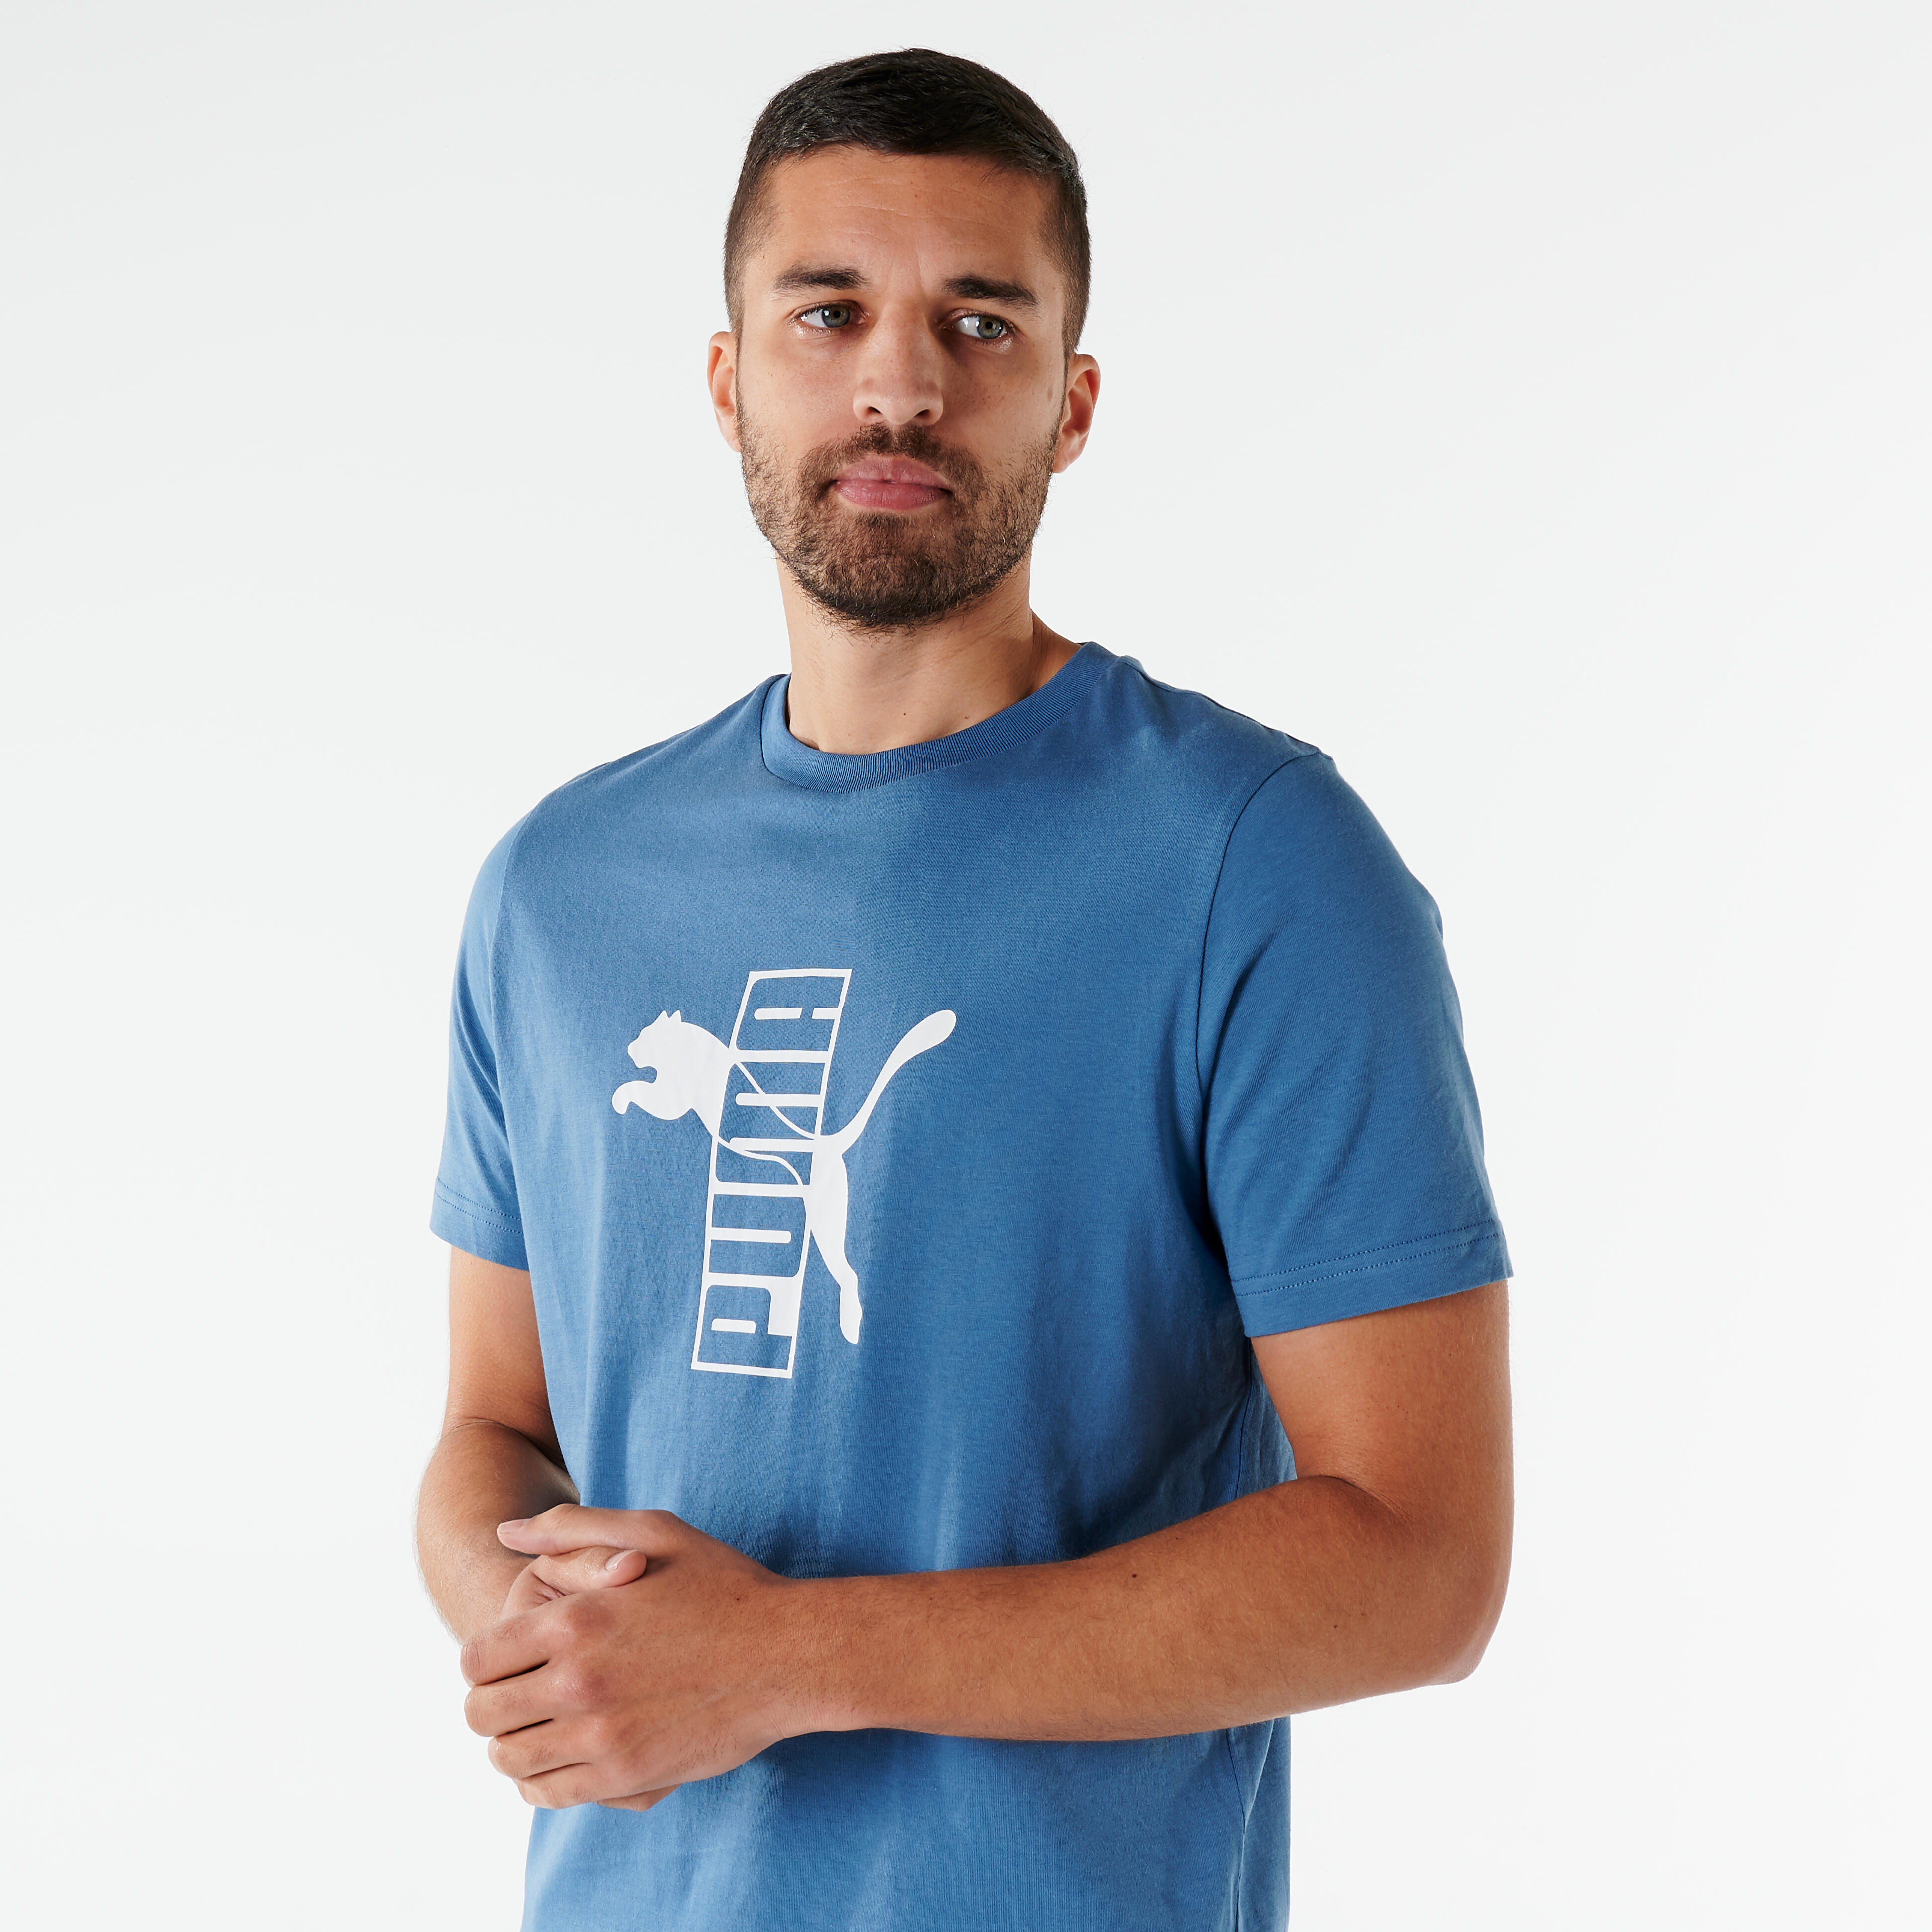 Comprar Camisetas Fitness Gimnasio Hombre Online - Decathlon